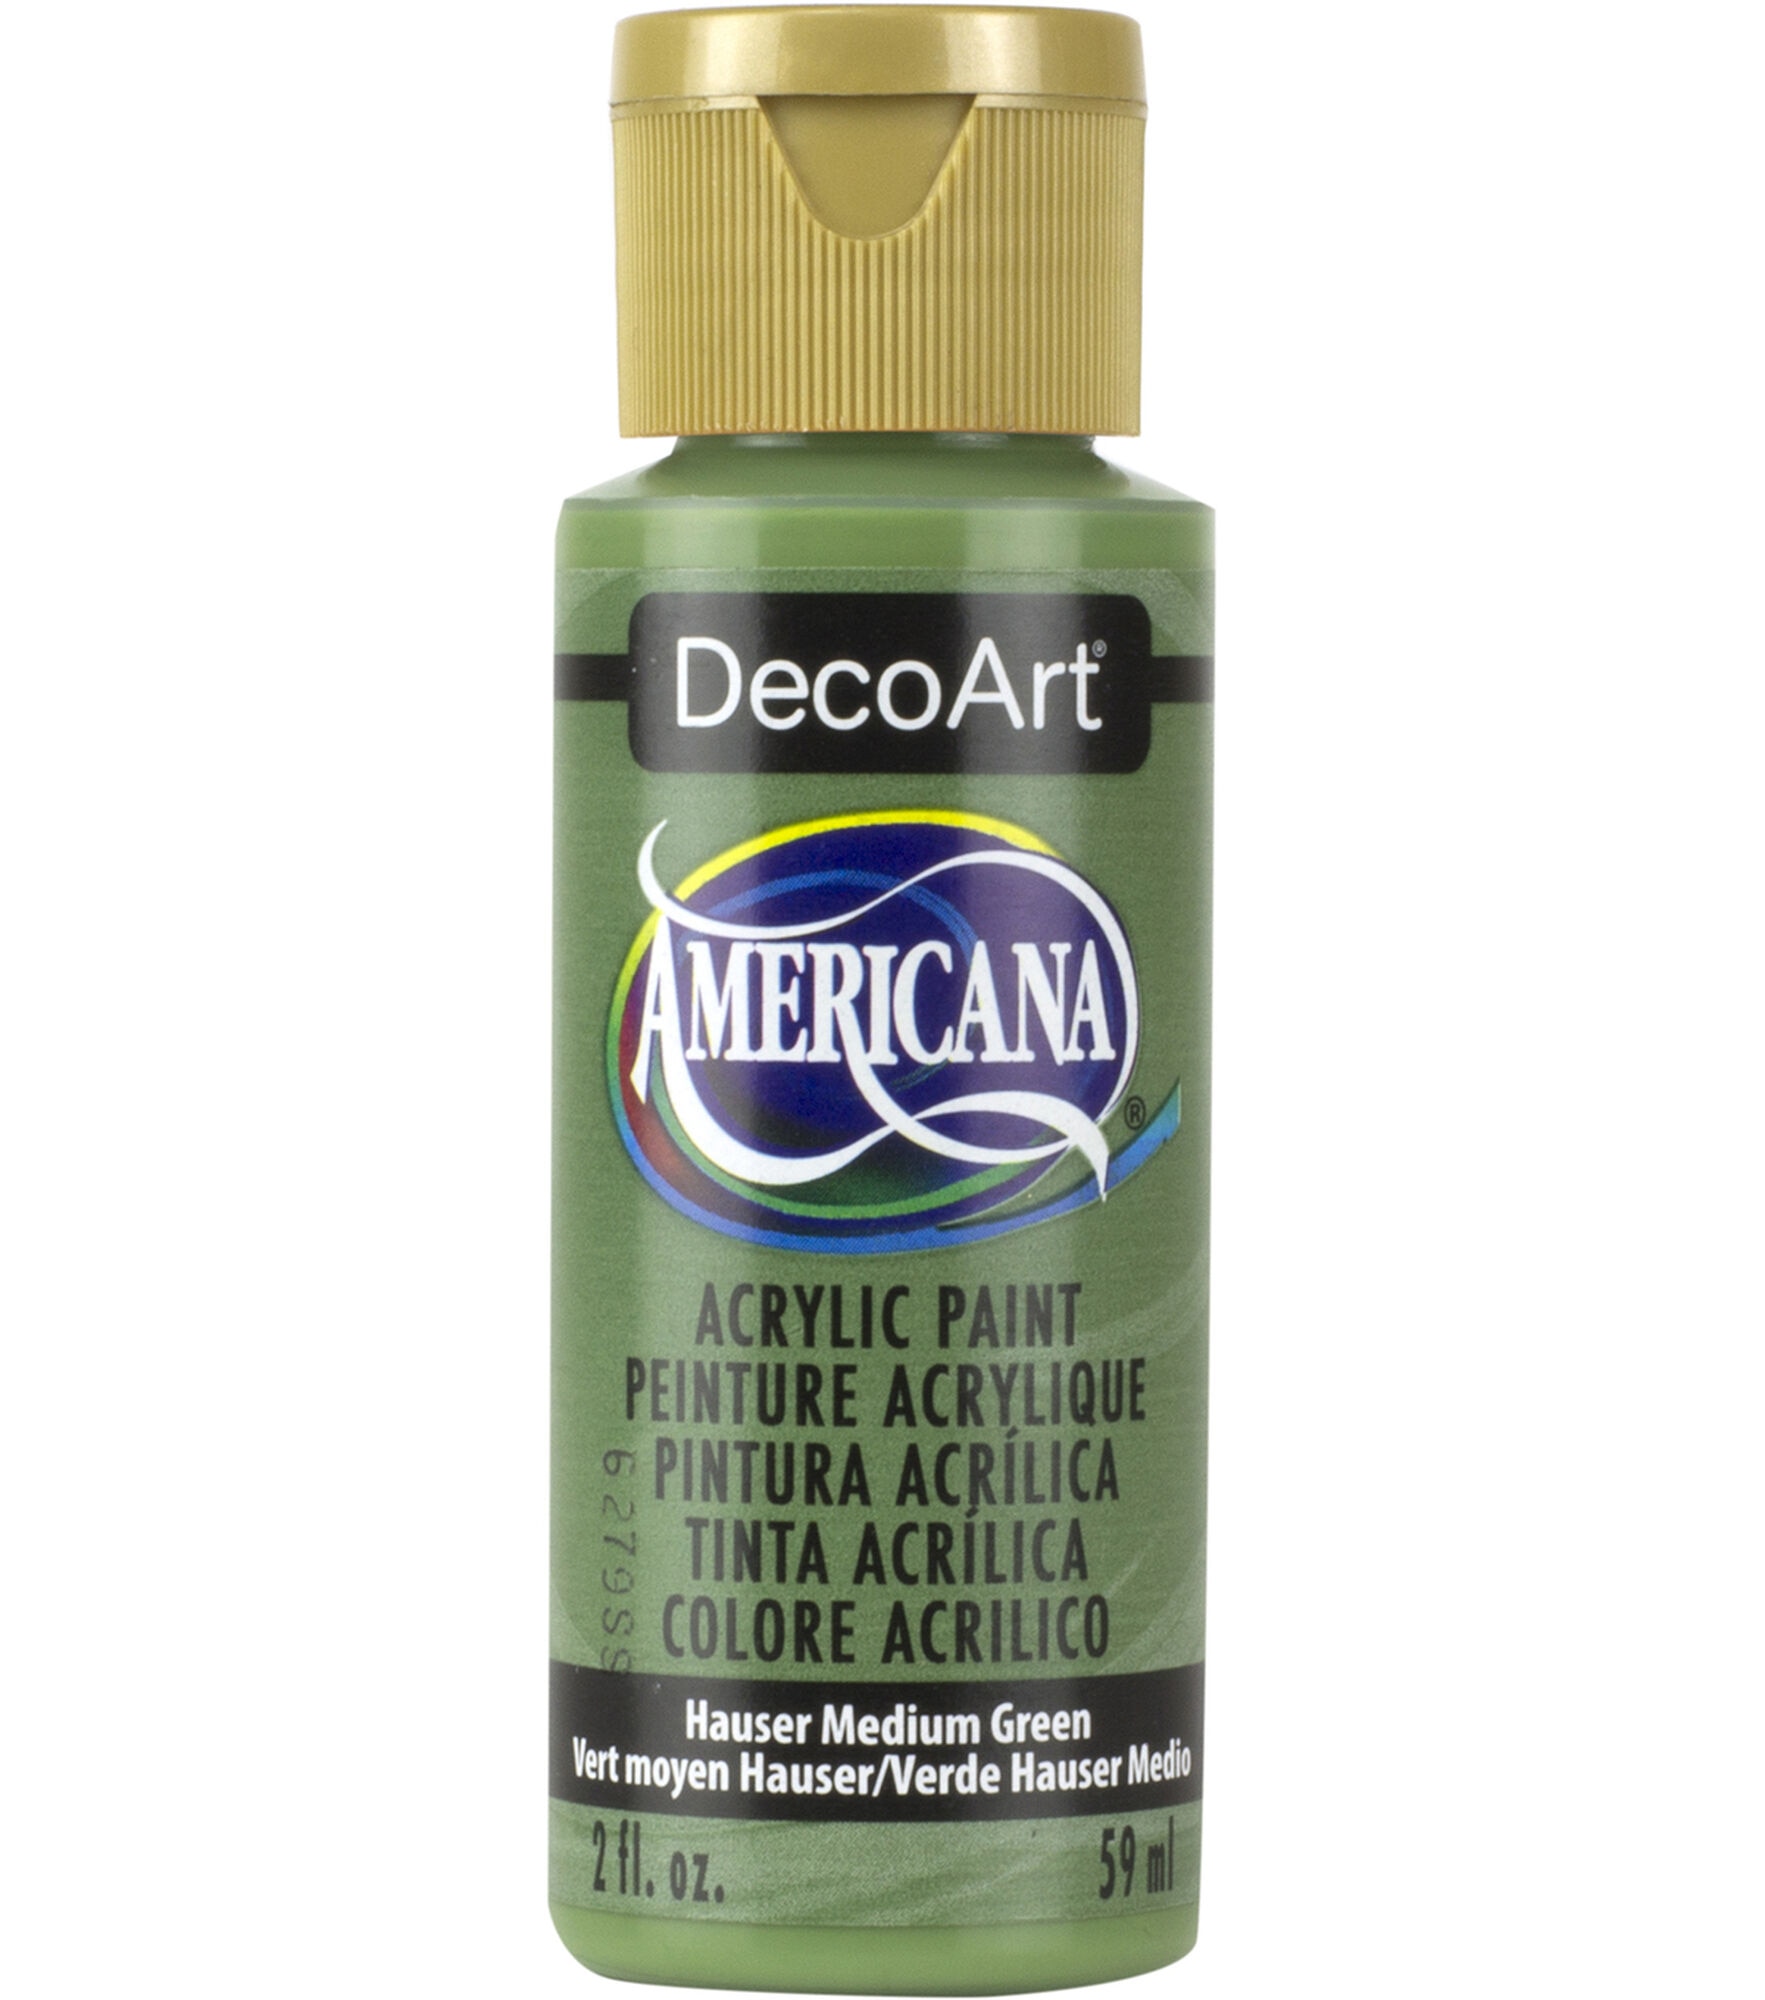 DecoArt Americana Acrylic 2oz Paint, Hauser Medium Green, hi-res